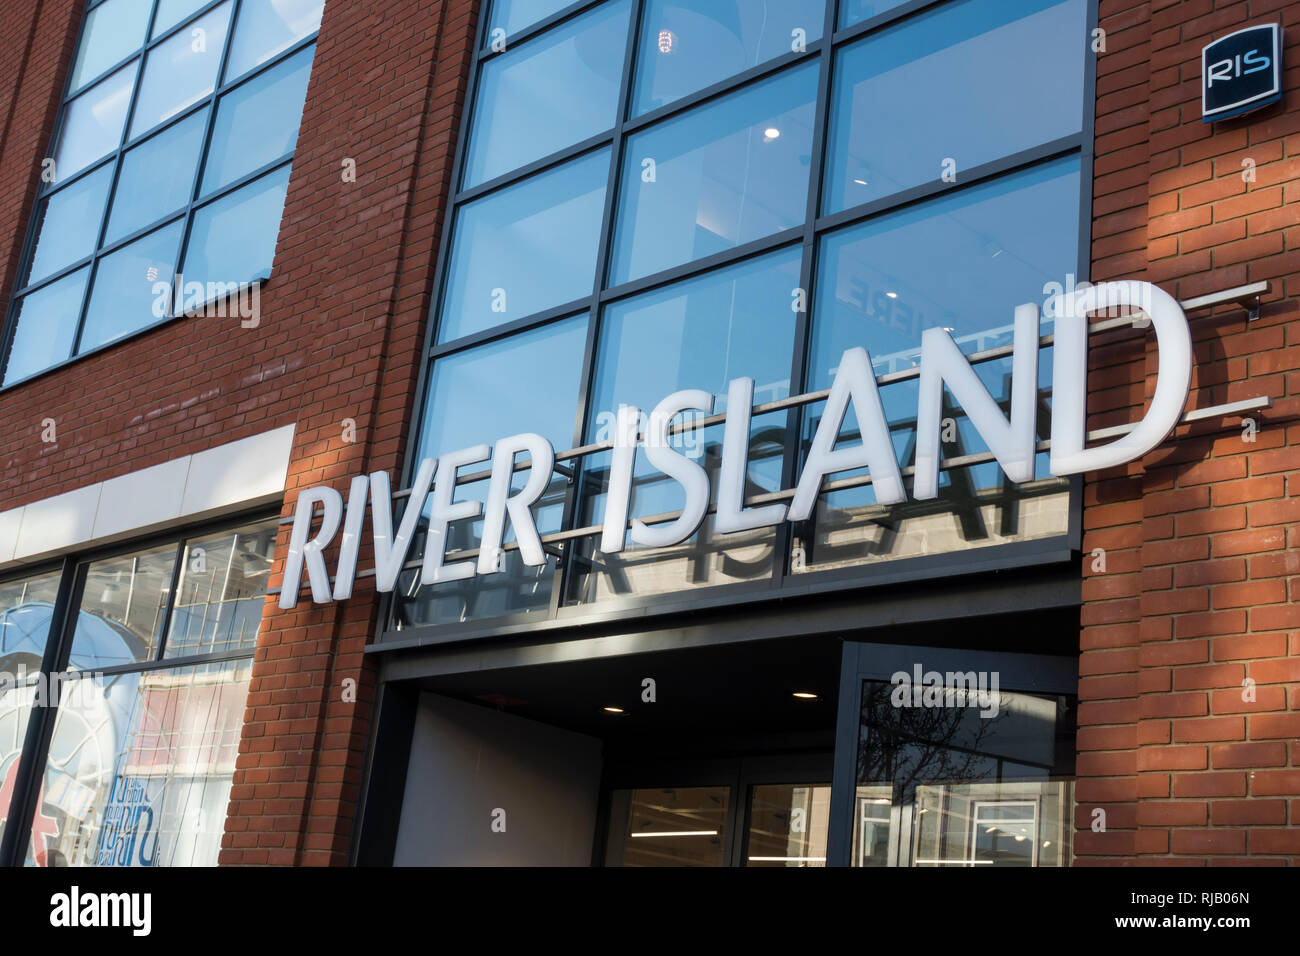 River Island tienda de ropa exterior, signo, logo. UK Foto de stock